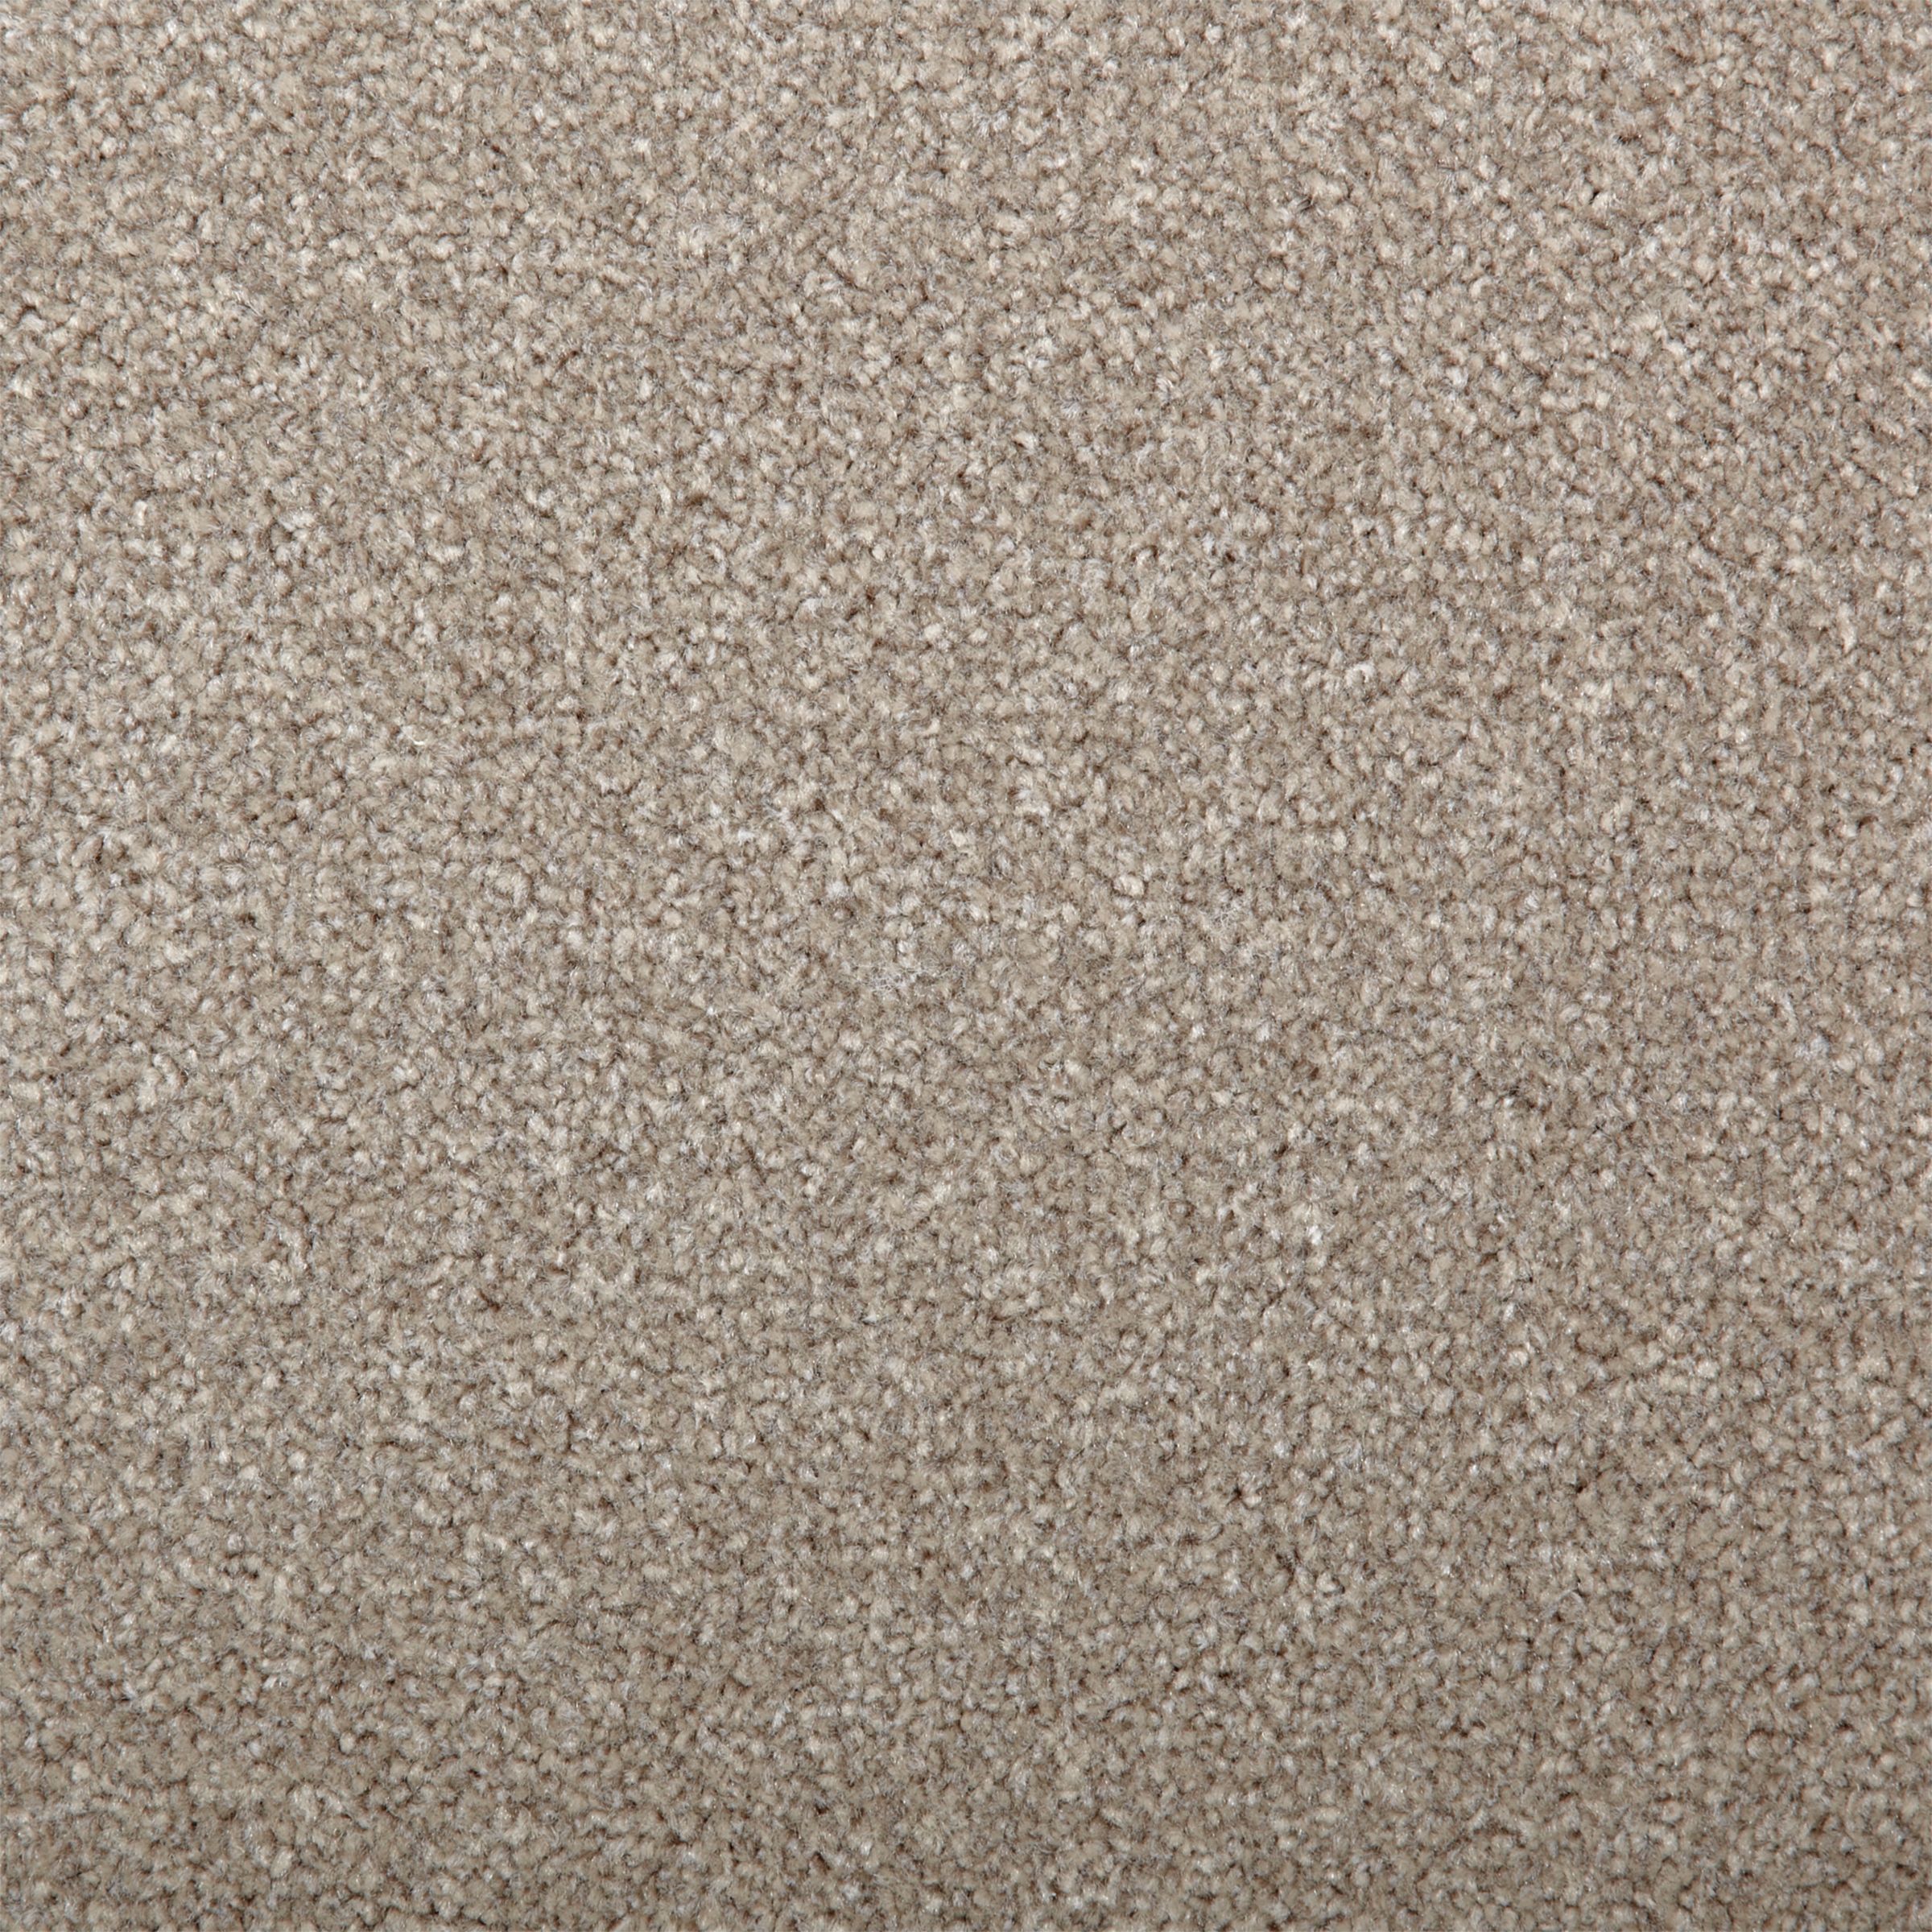 John Lewis & Partners Newport Carpet